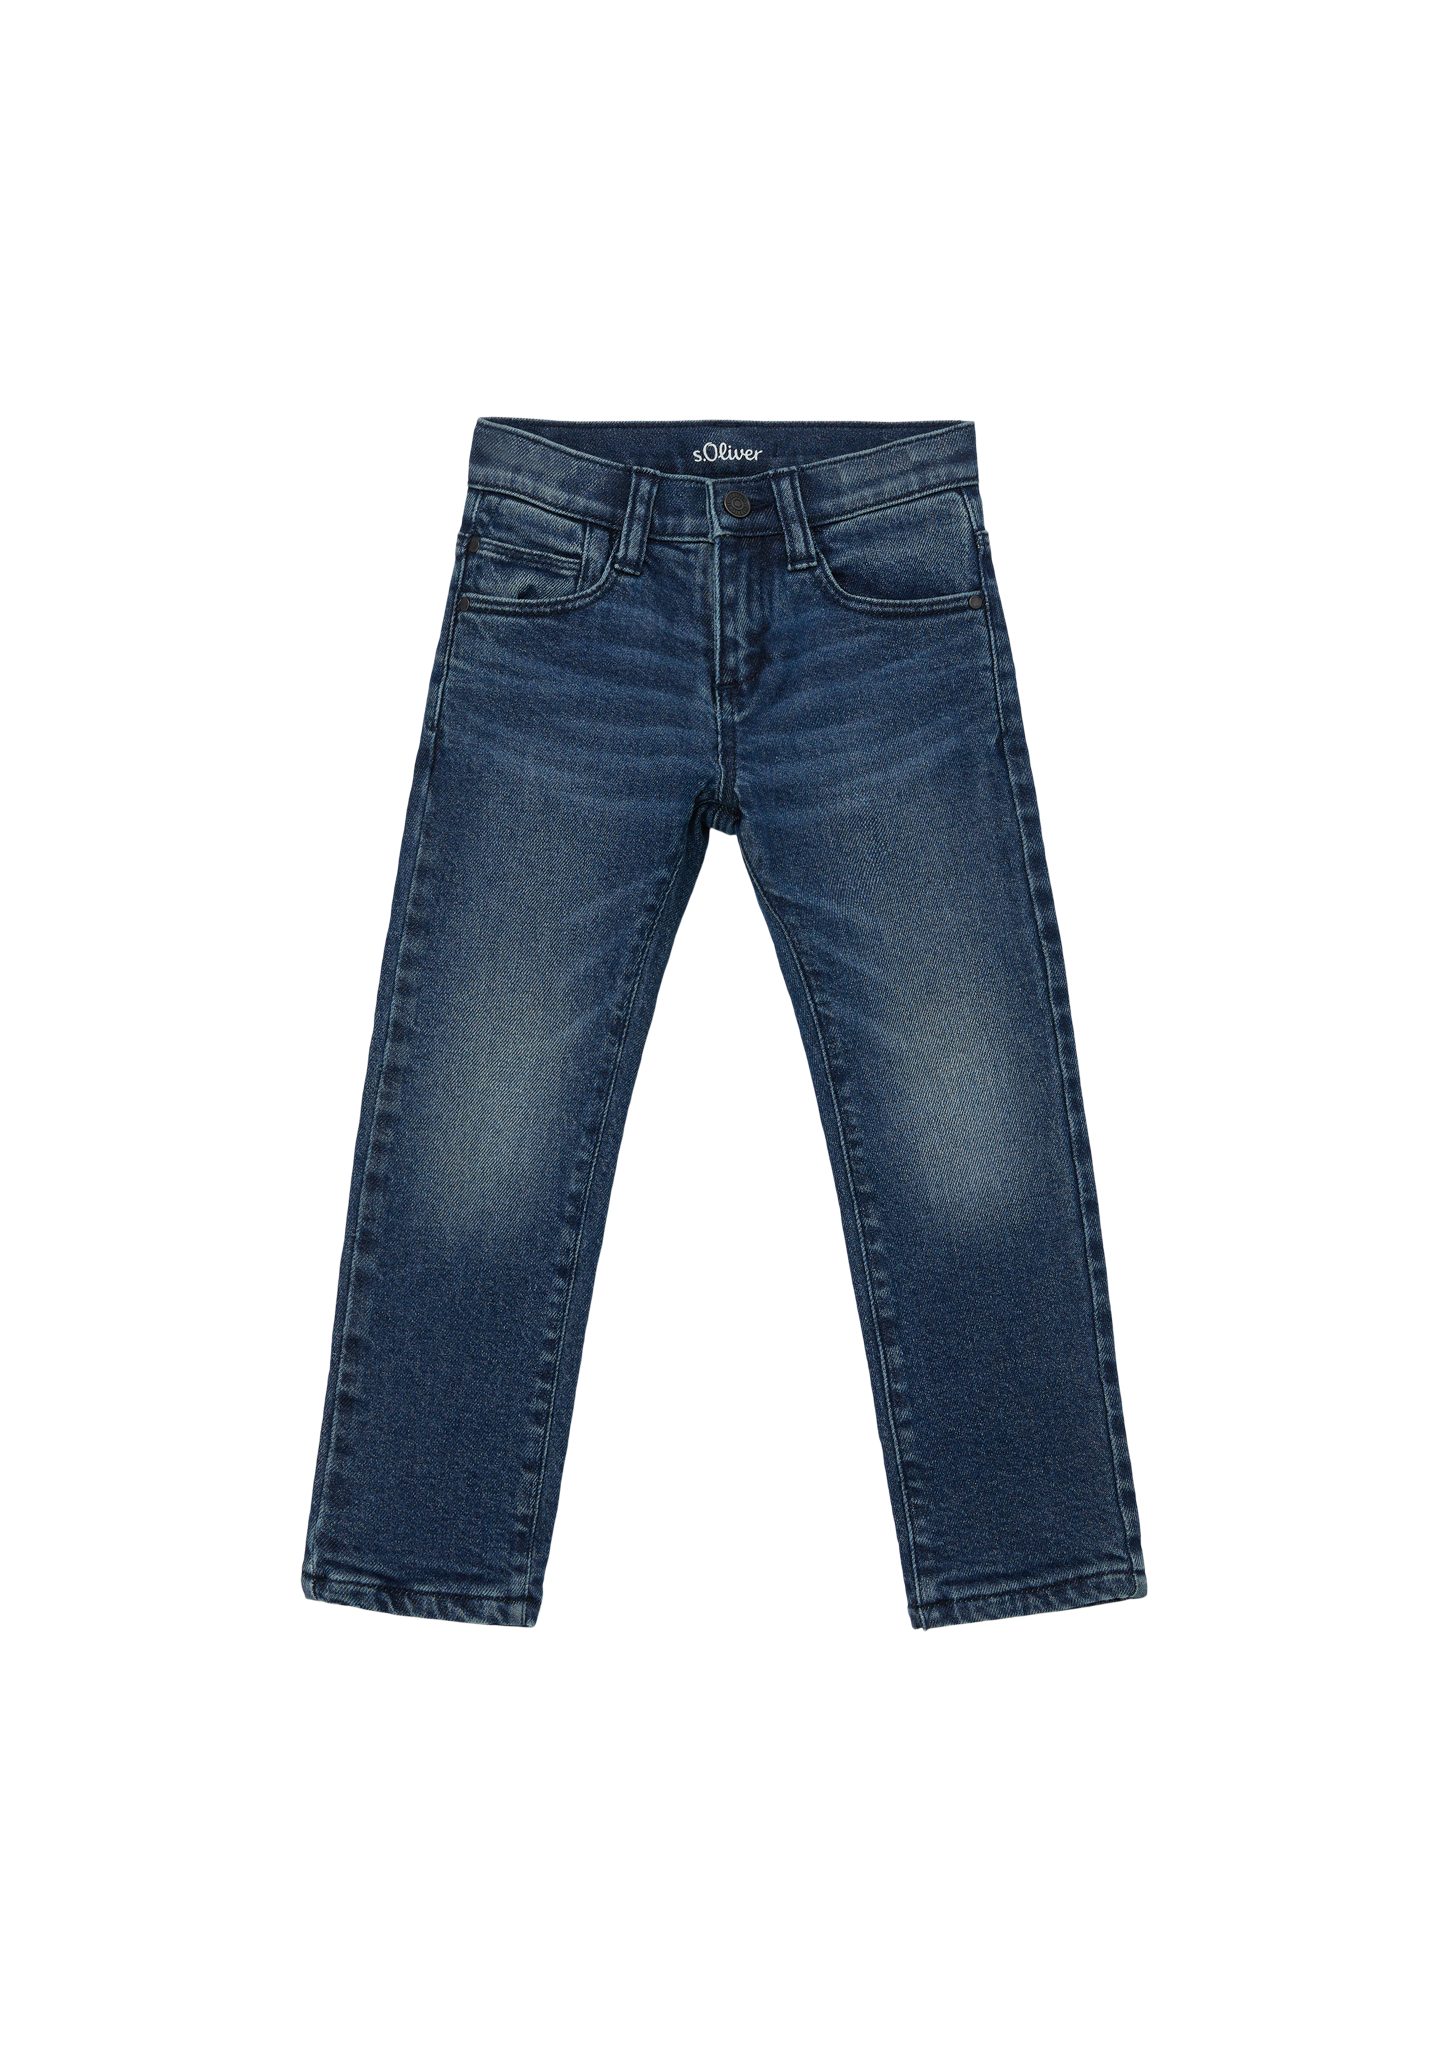 s.Oliver 5-Pocket-Jeans Gefütterte Jeans Waschung Fit Pelle Rise / / Leg Regular Mid / Straight